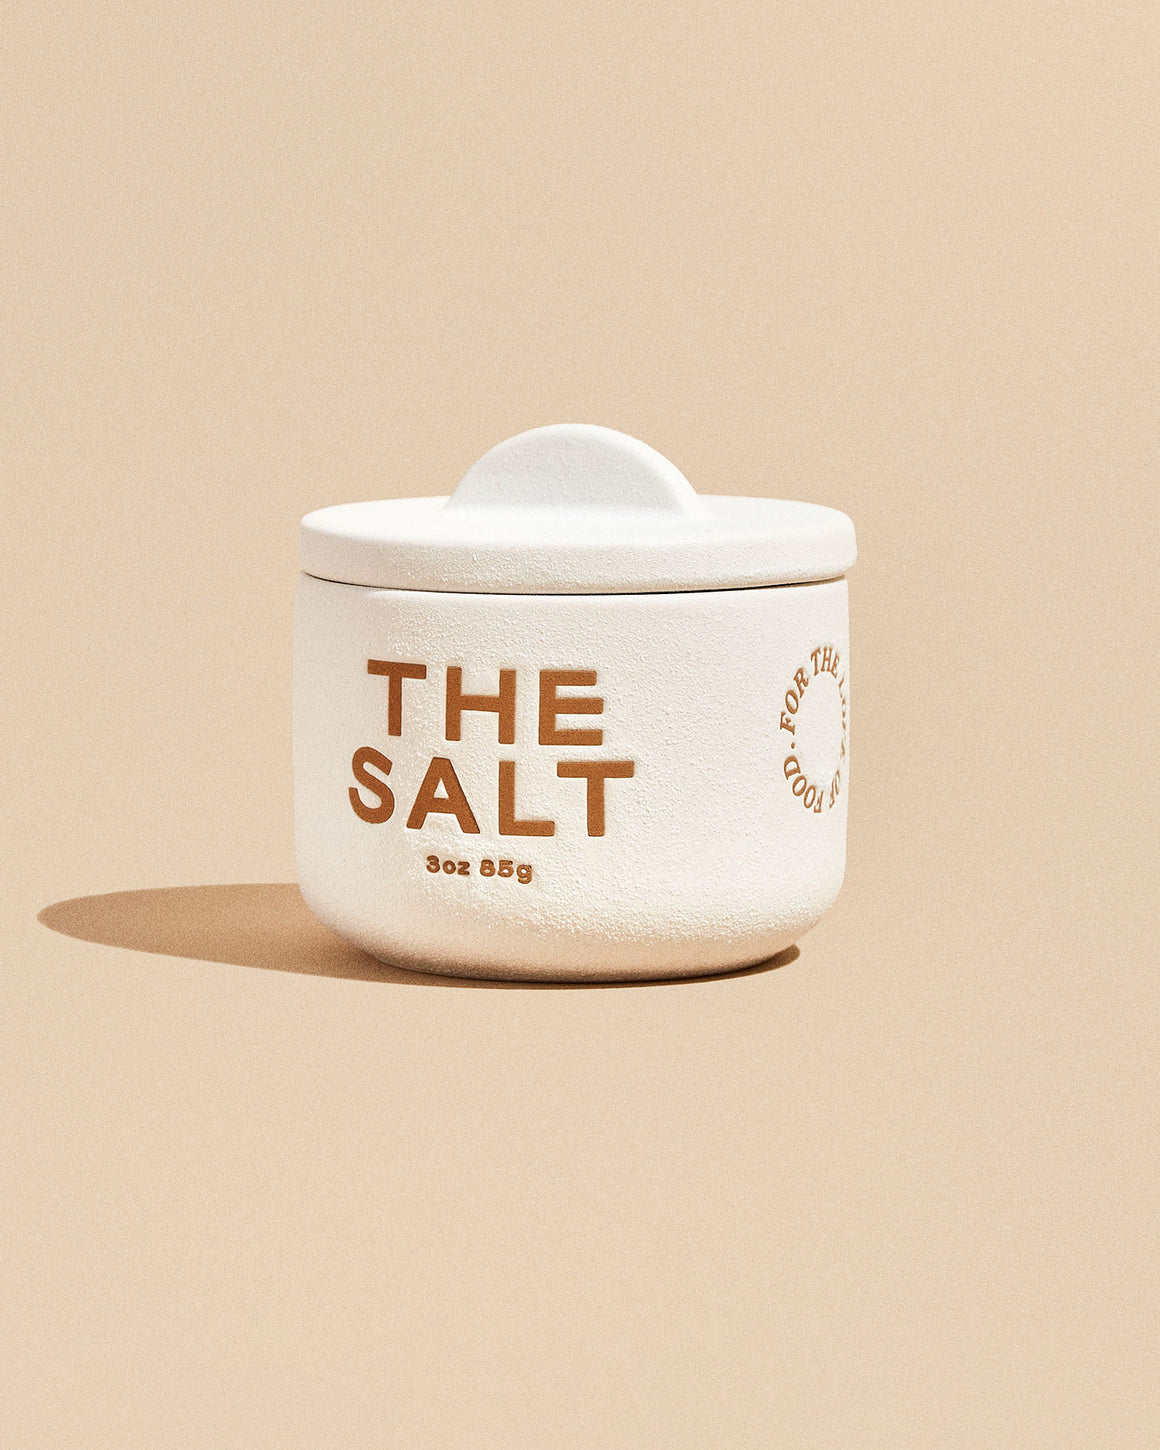 "The Salt"